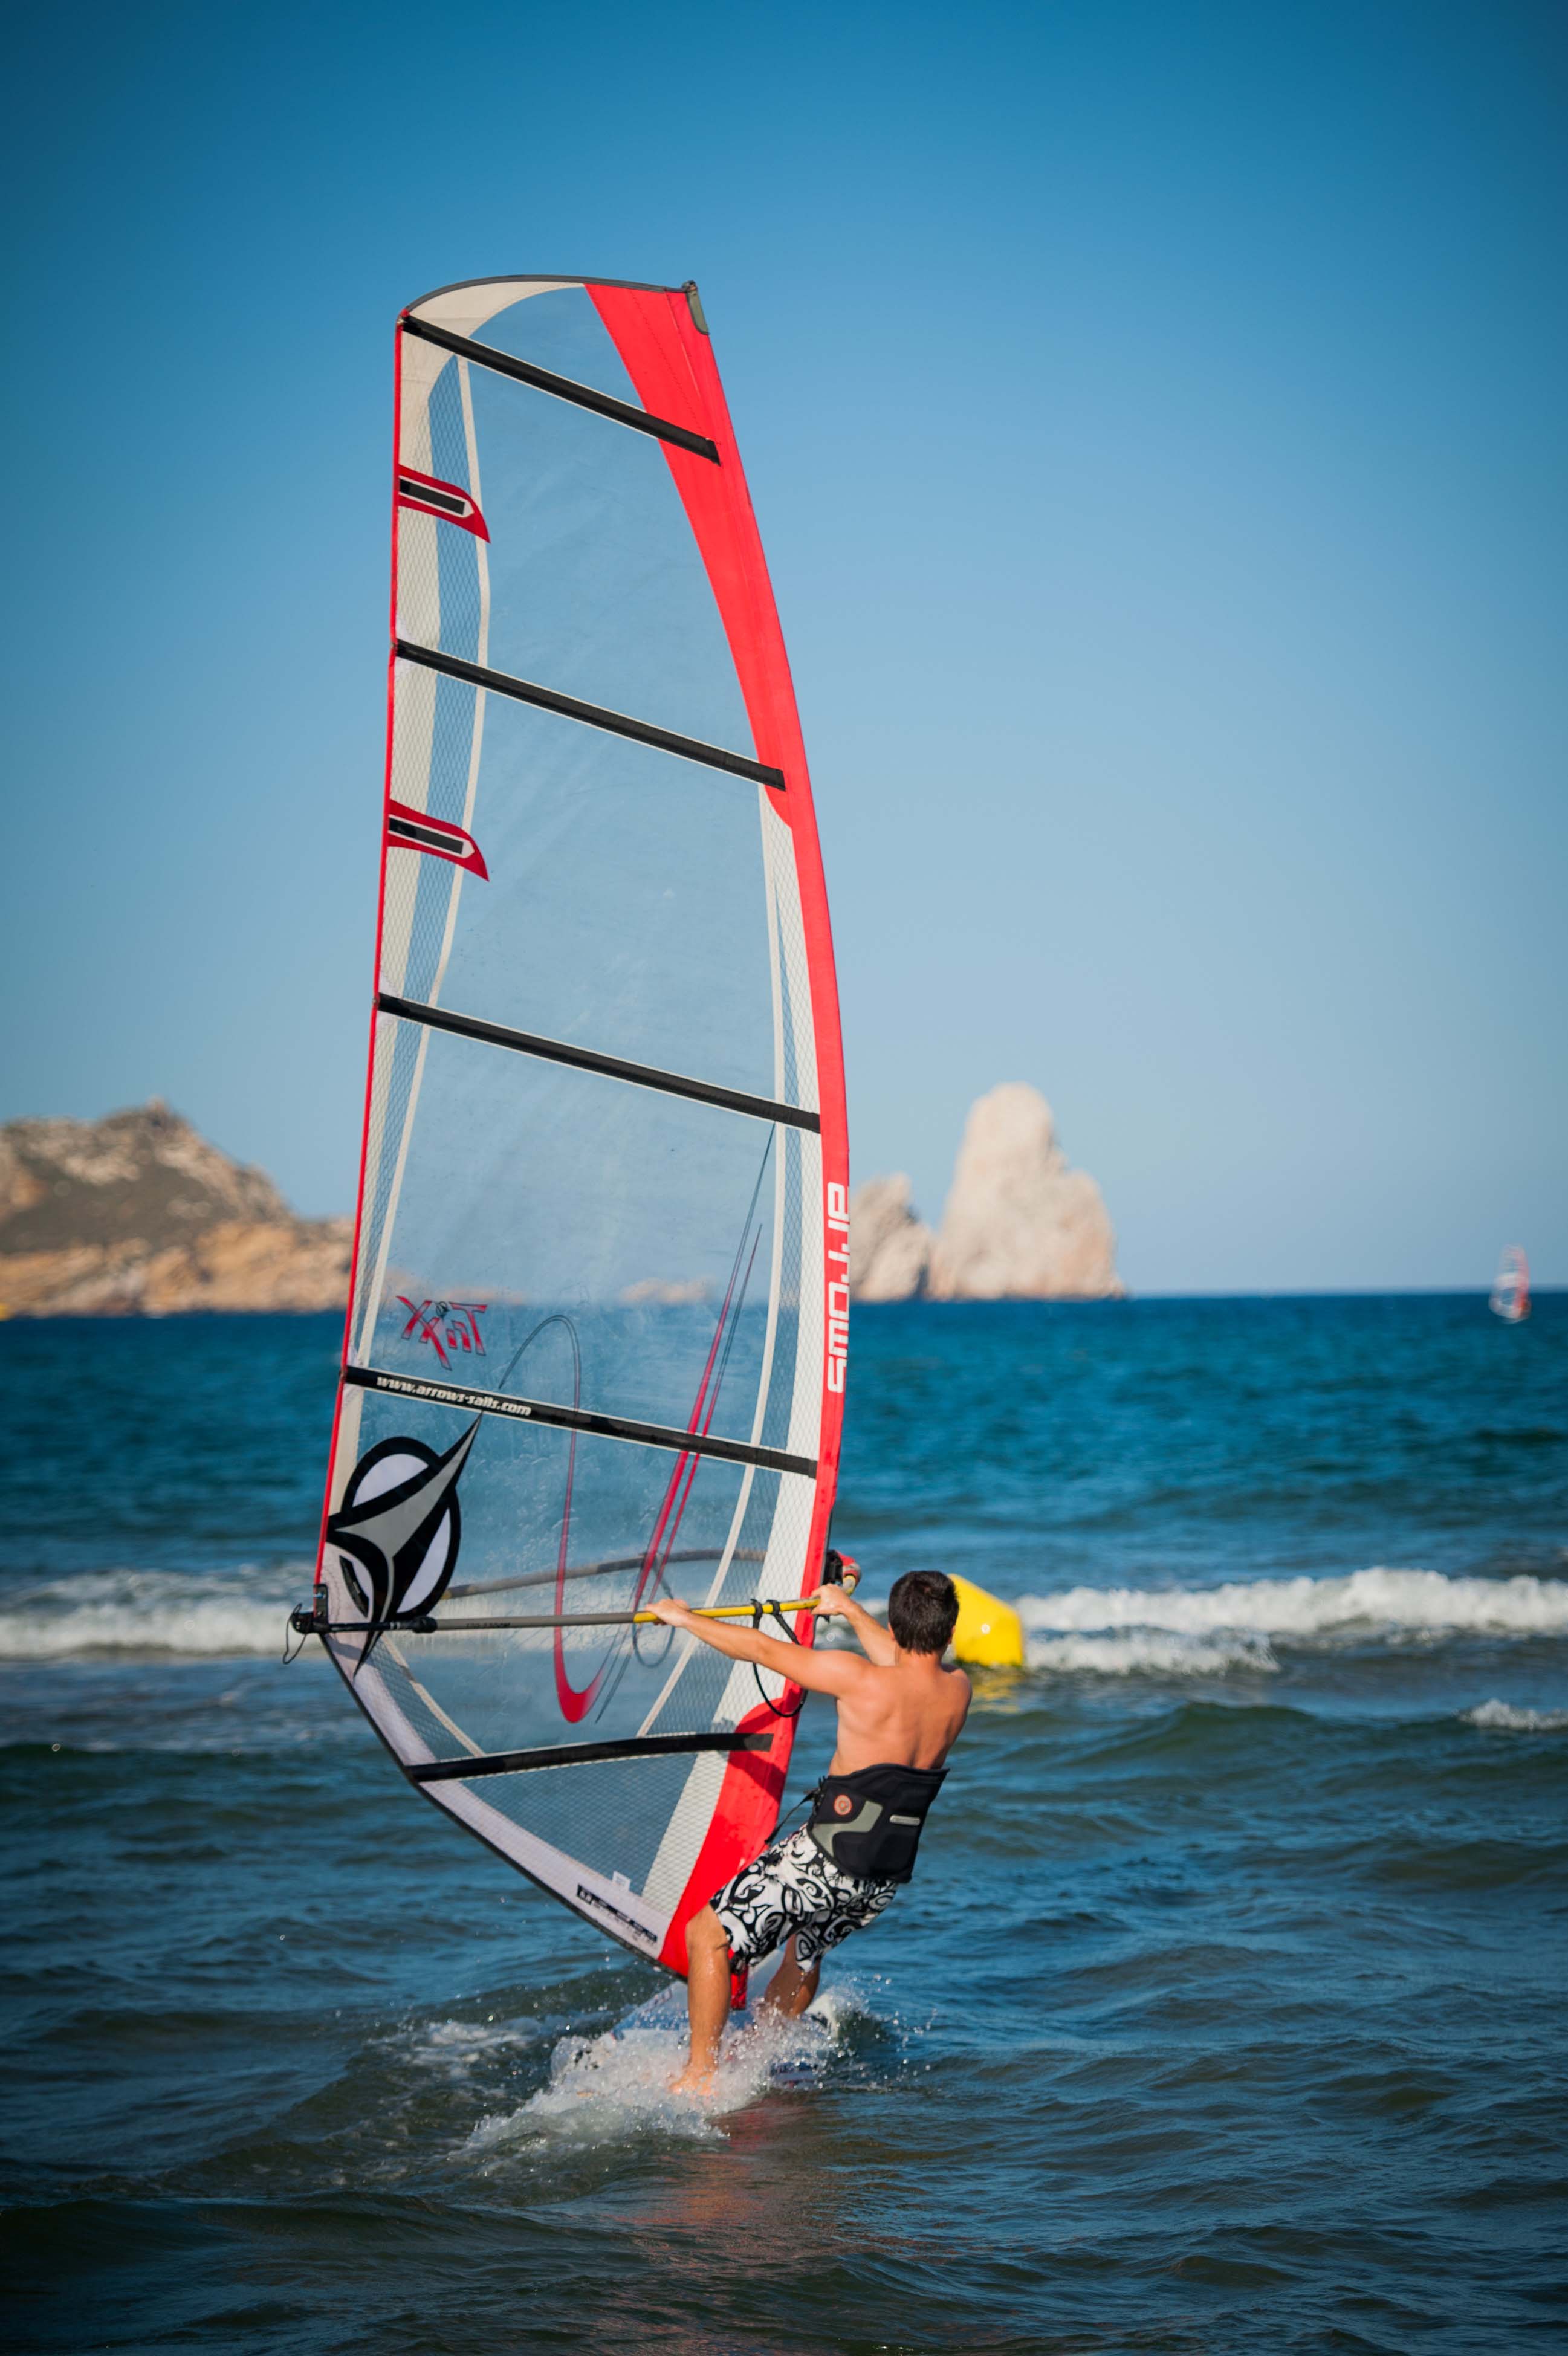 l estartit spain august 8 2021 man rides windsurfing boat